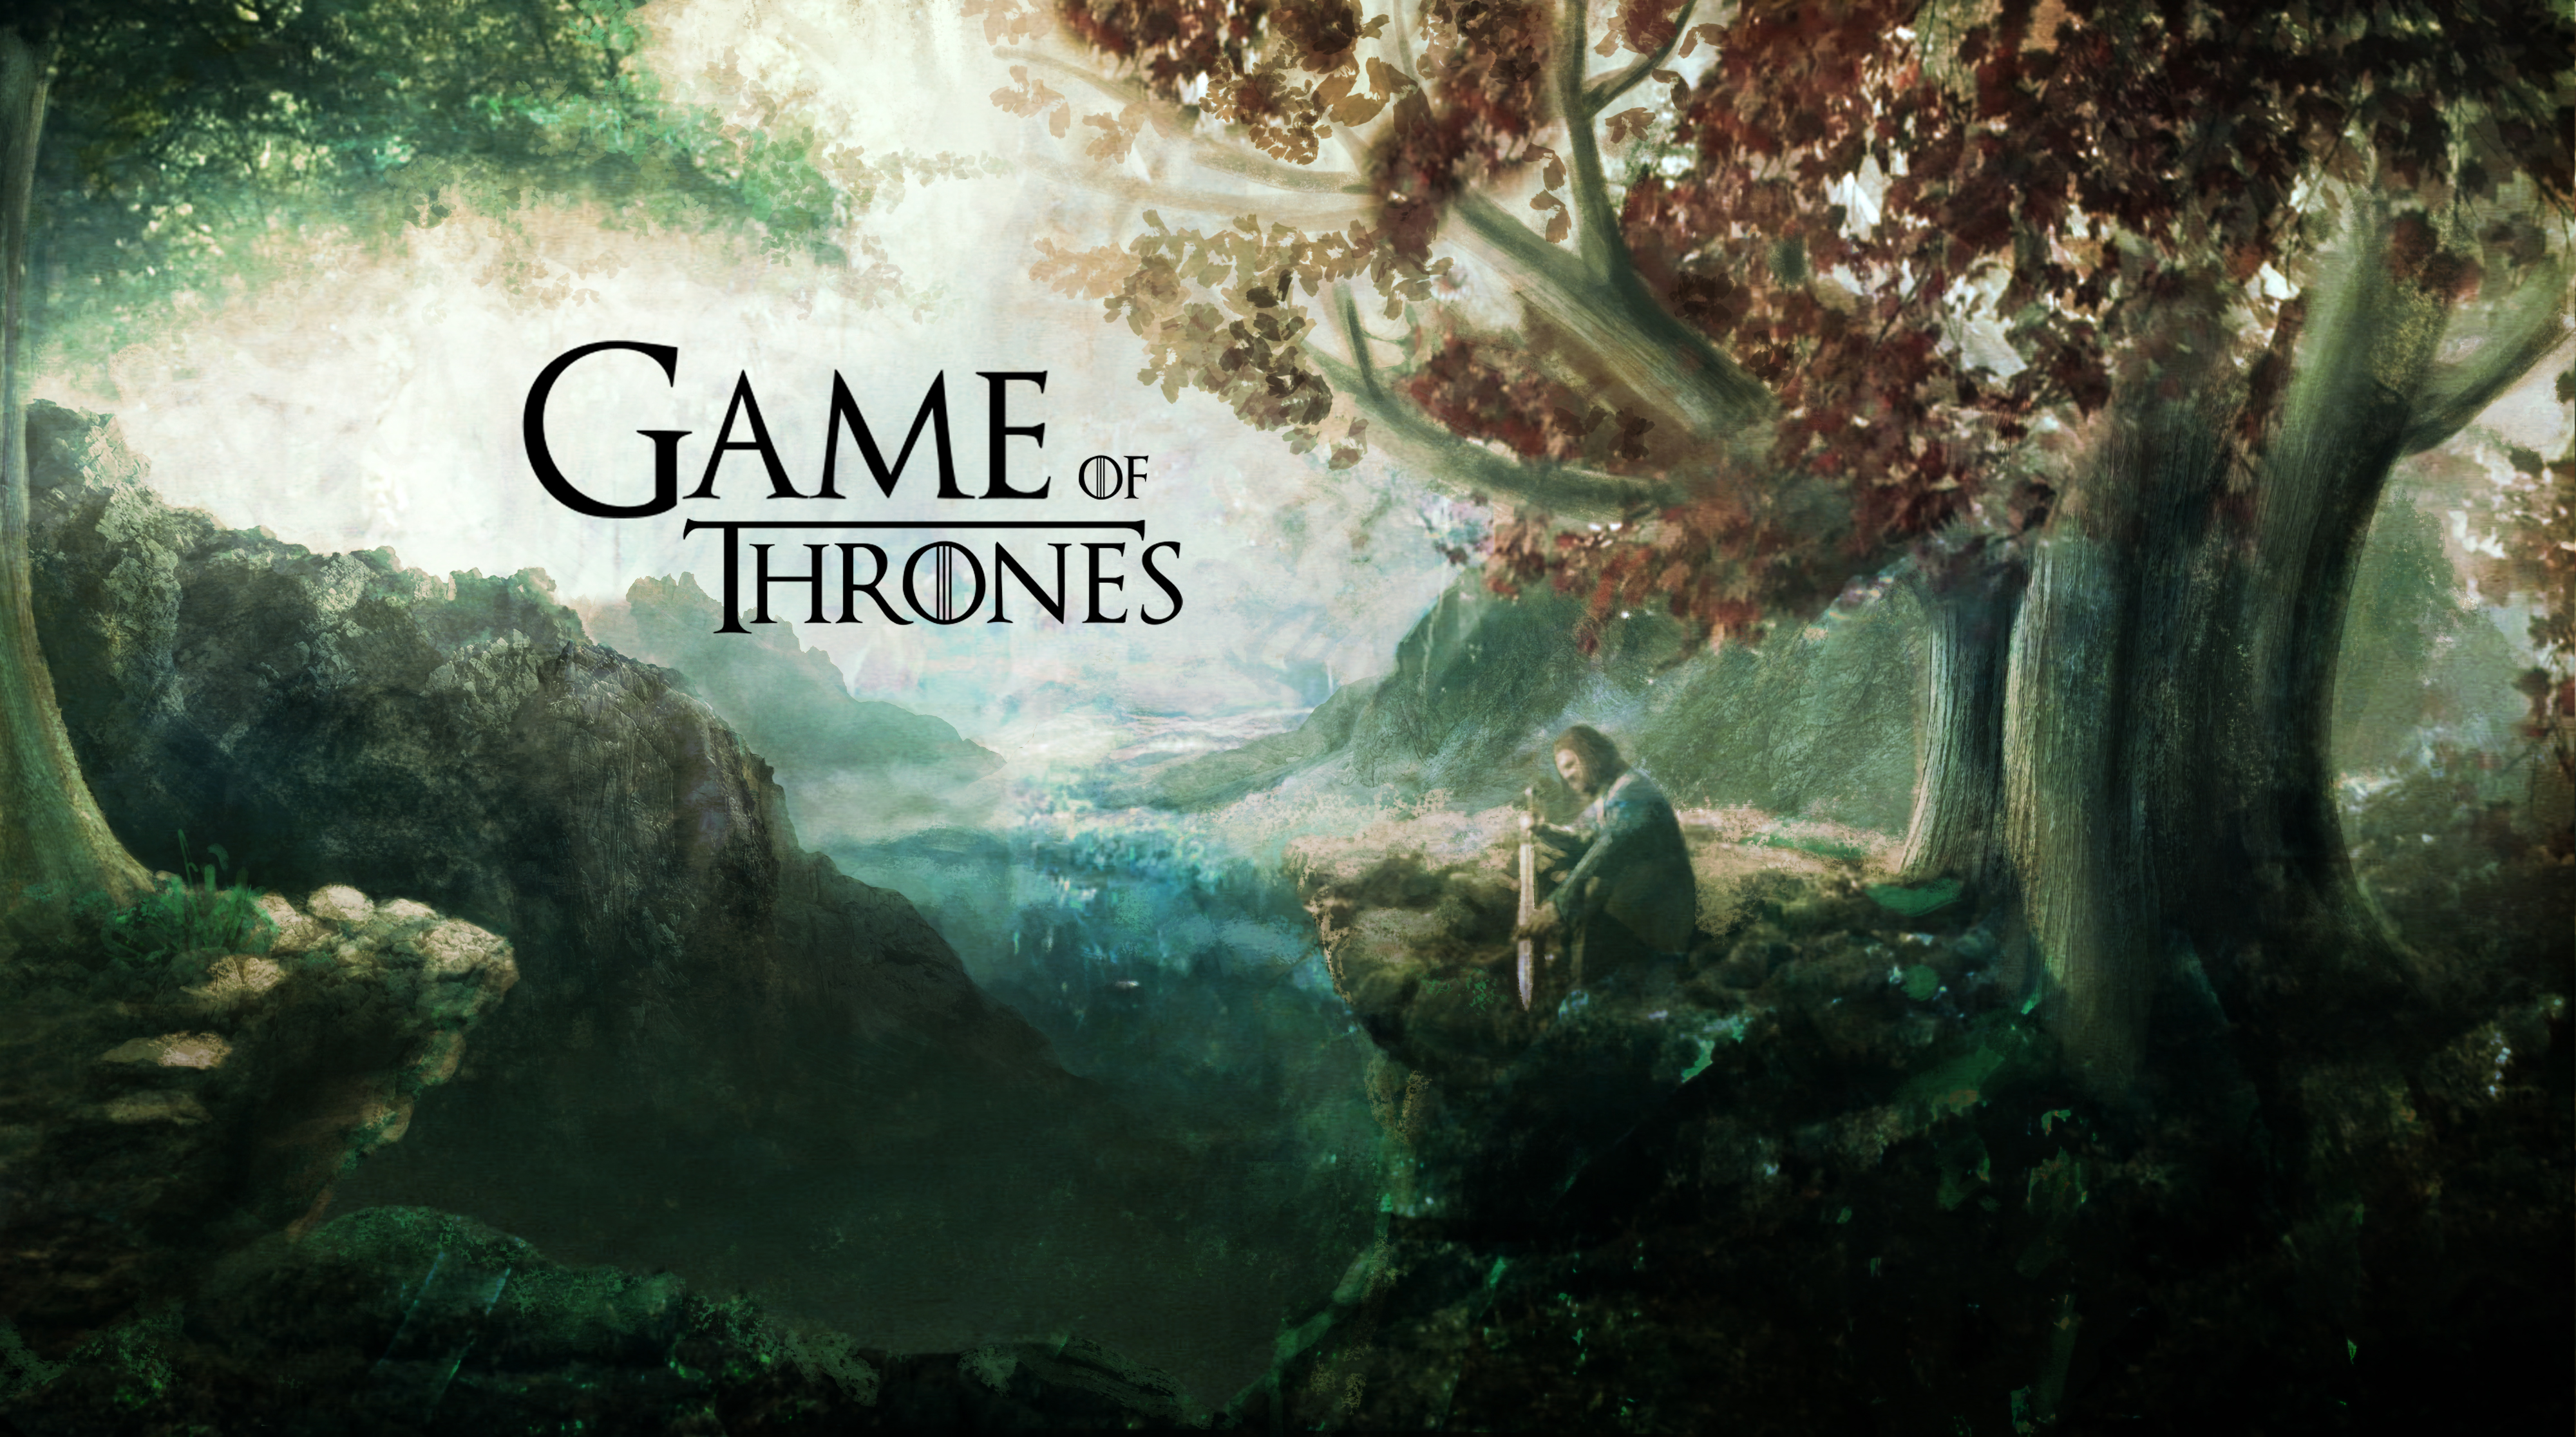 TV Show Game Of Thrones 4k Ultra HD Wallpaper by CreaSdOutlineR